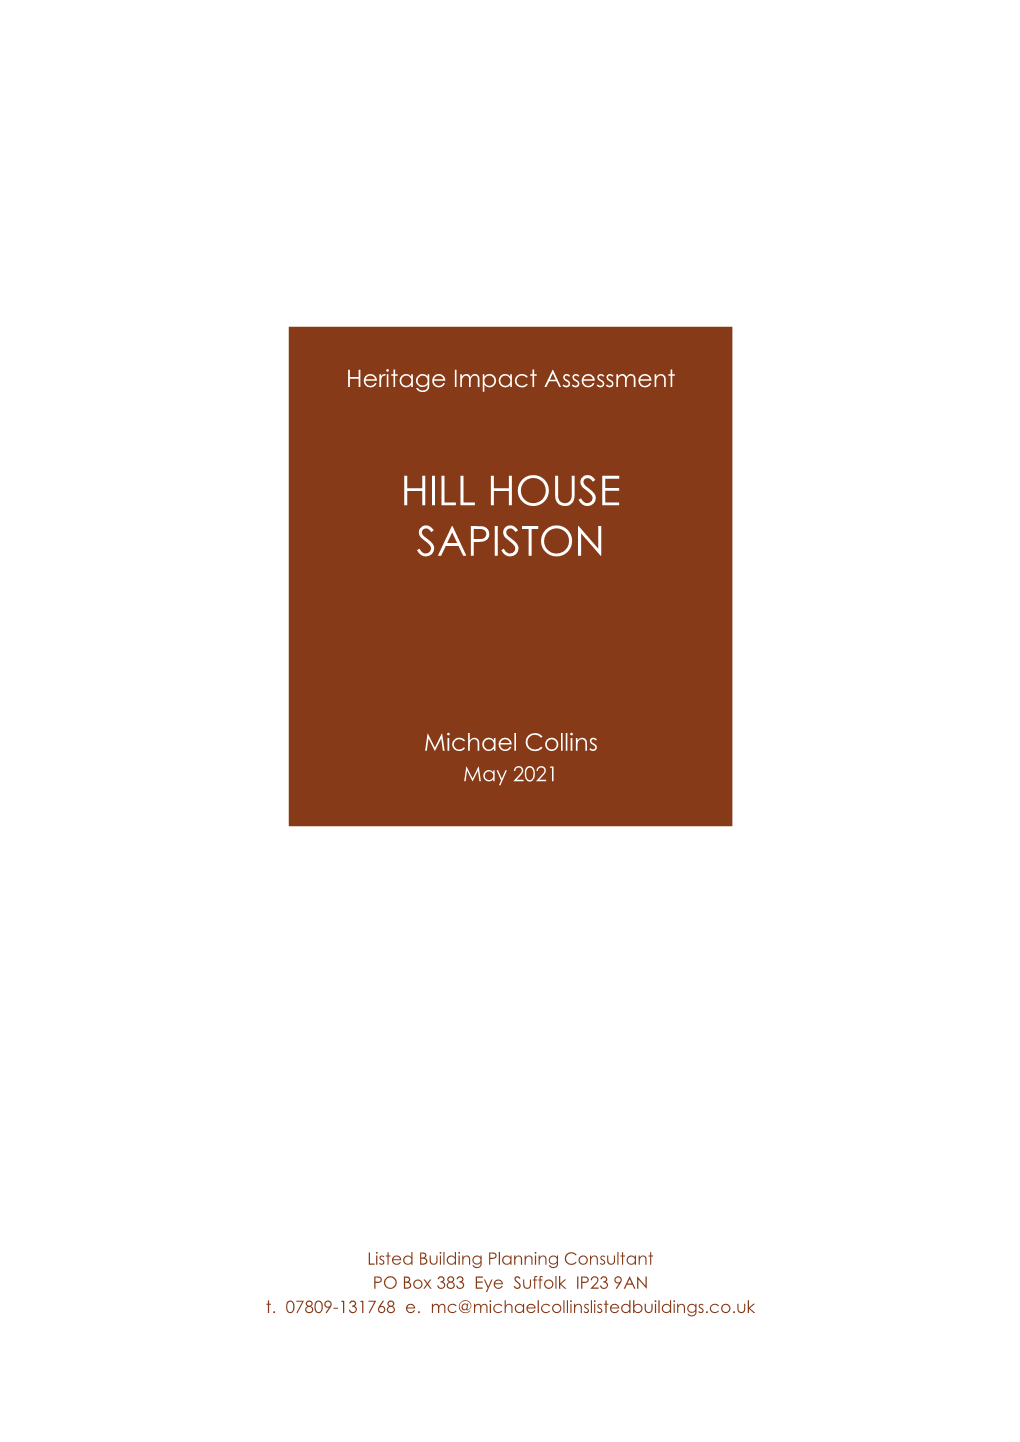 Hill House Sapiston